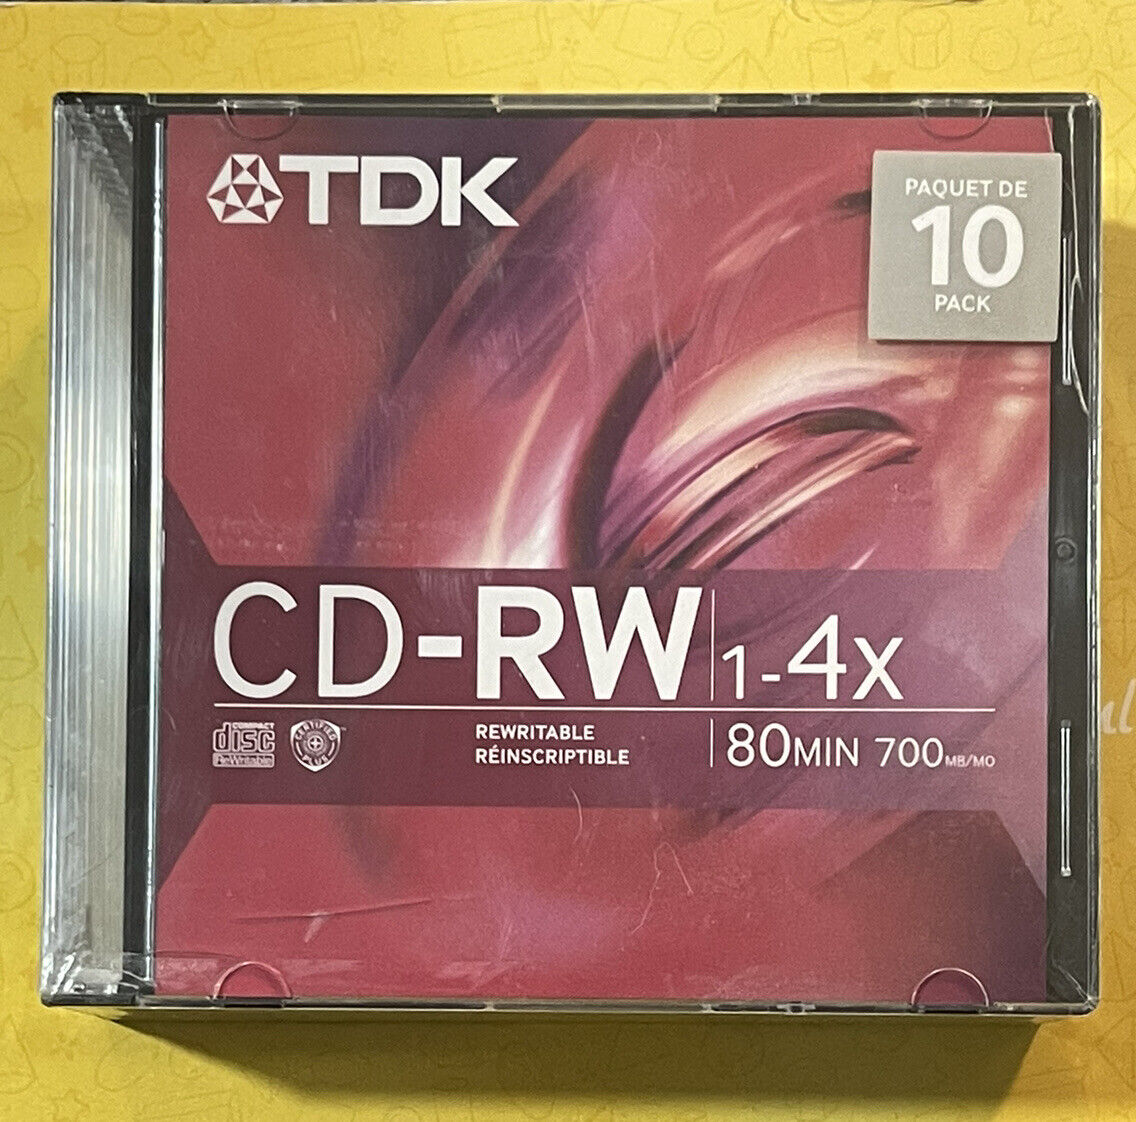 TDK CD-RW Rewritable Data CD's 1x-4x, 700MB 80 min 10 pack Factory sealed MUSIC